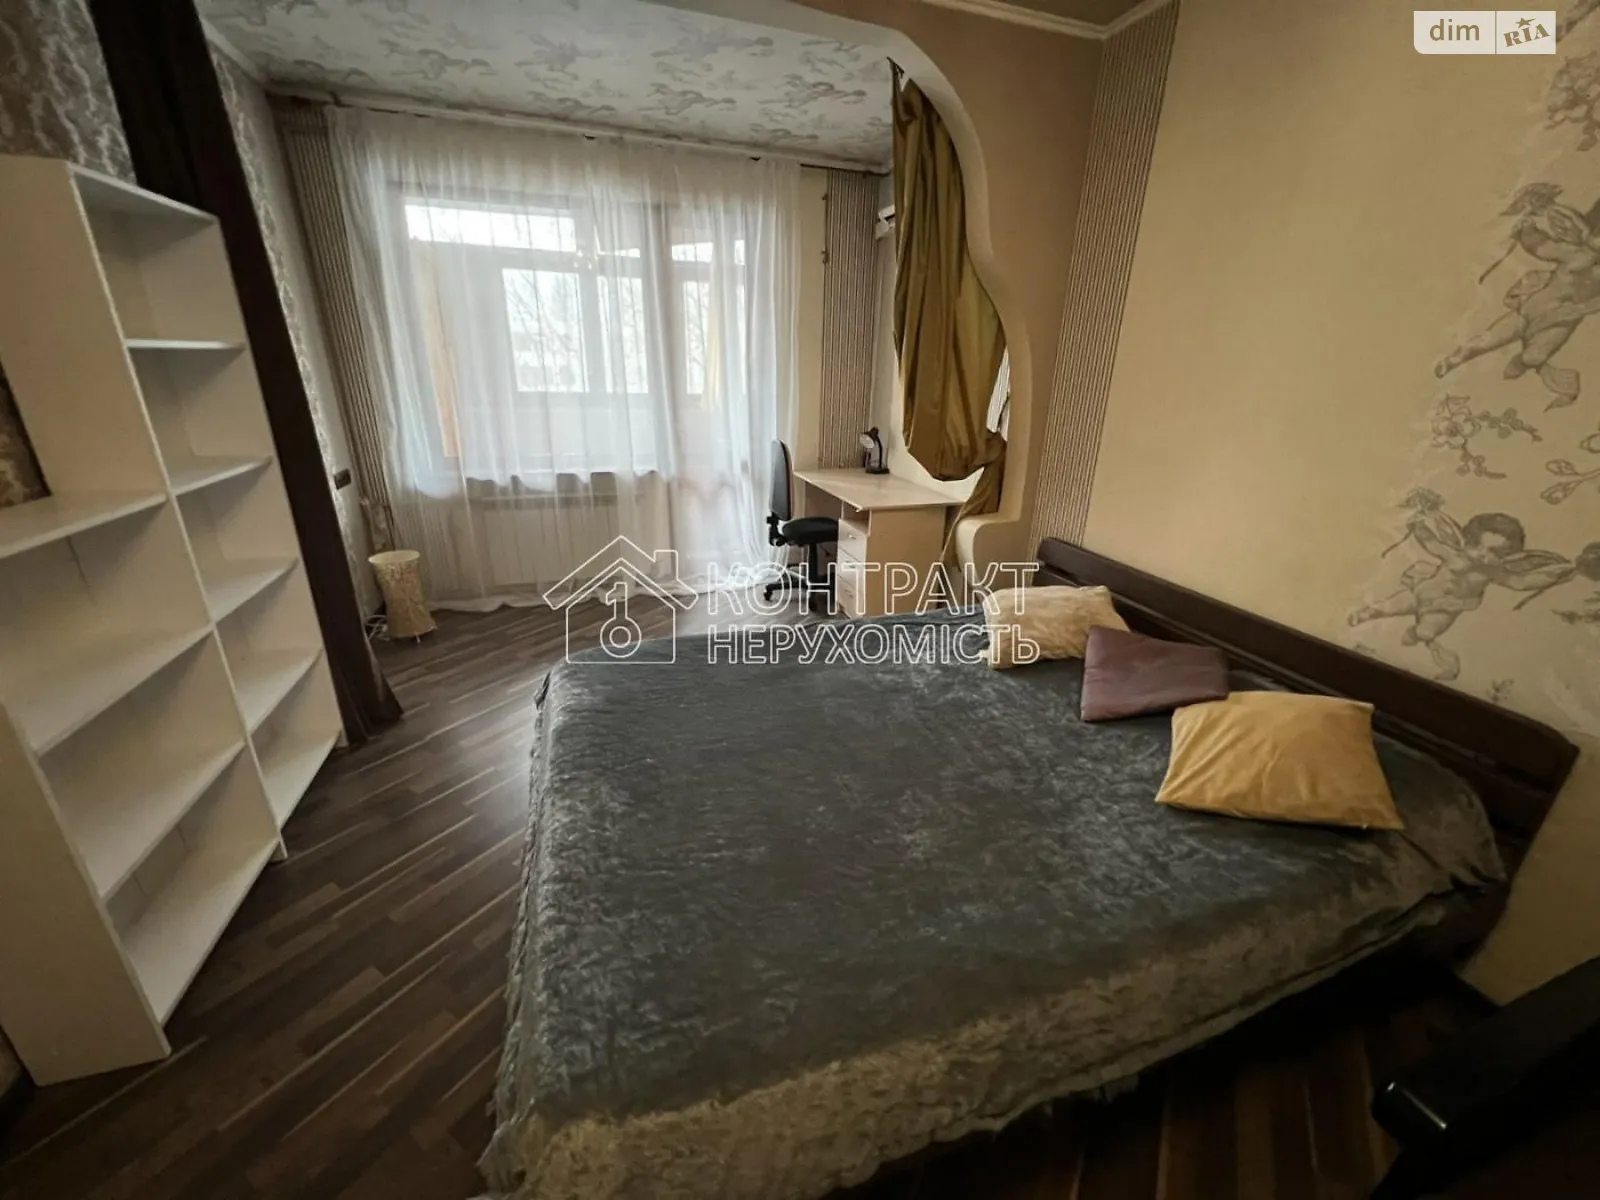 Сдается в аренду 2-комнатная квартира 47 кв. м в Харькове, ул. Академика Павлова - фото 1